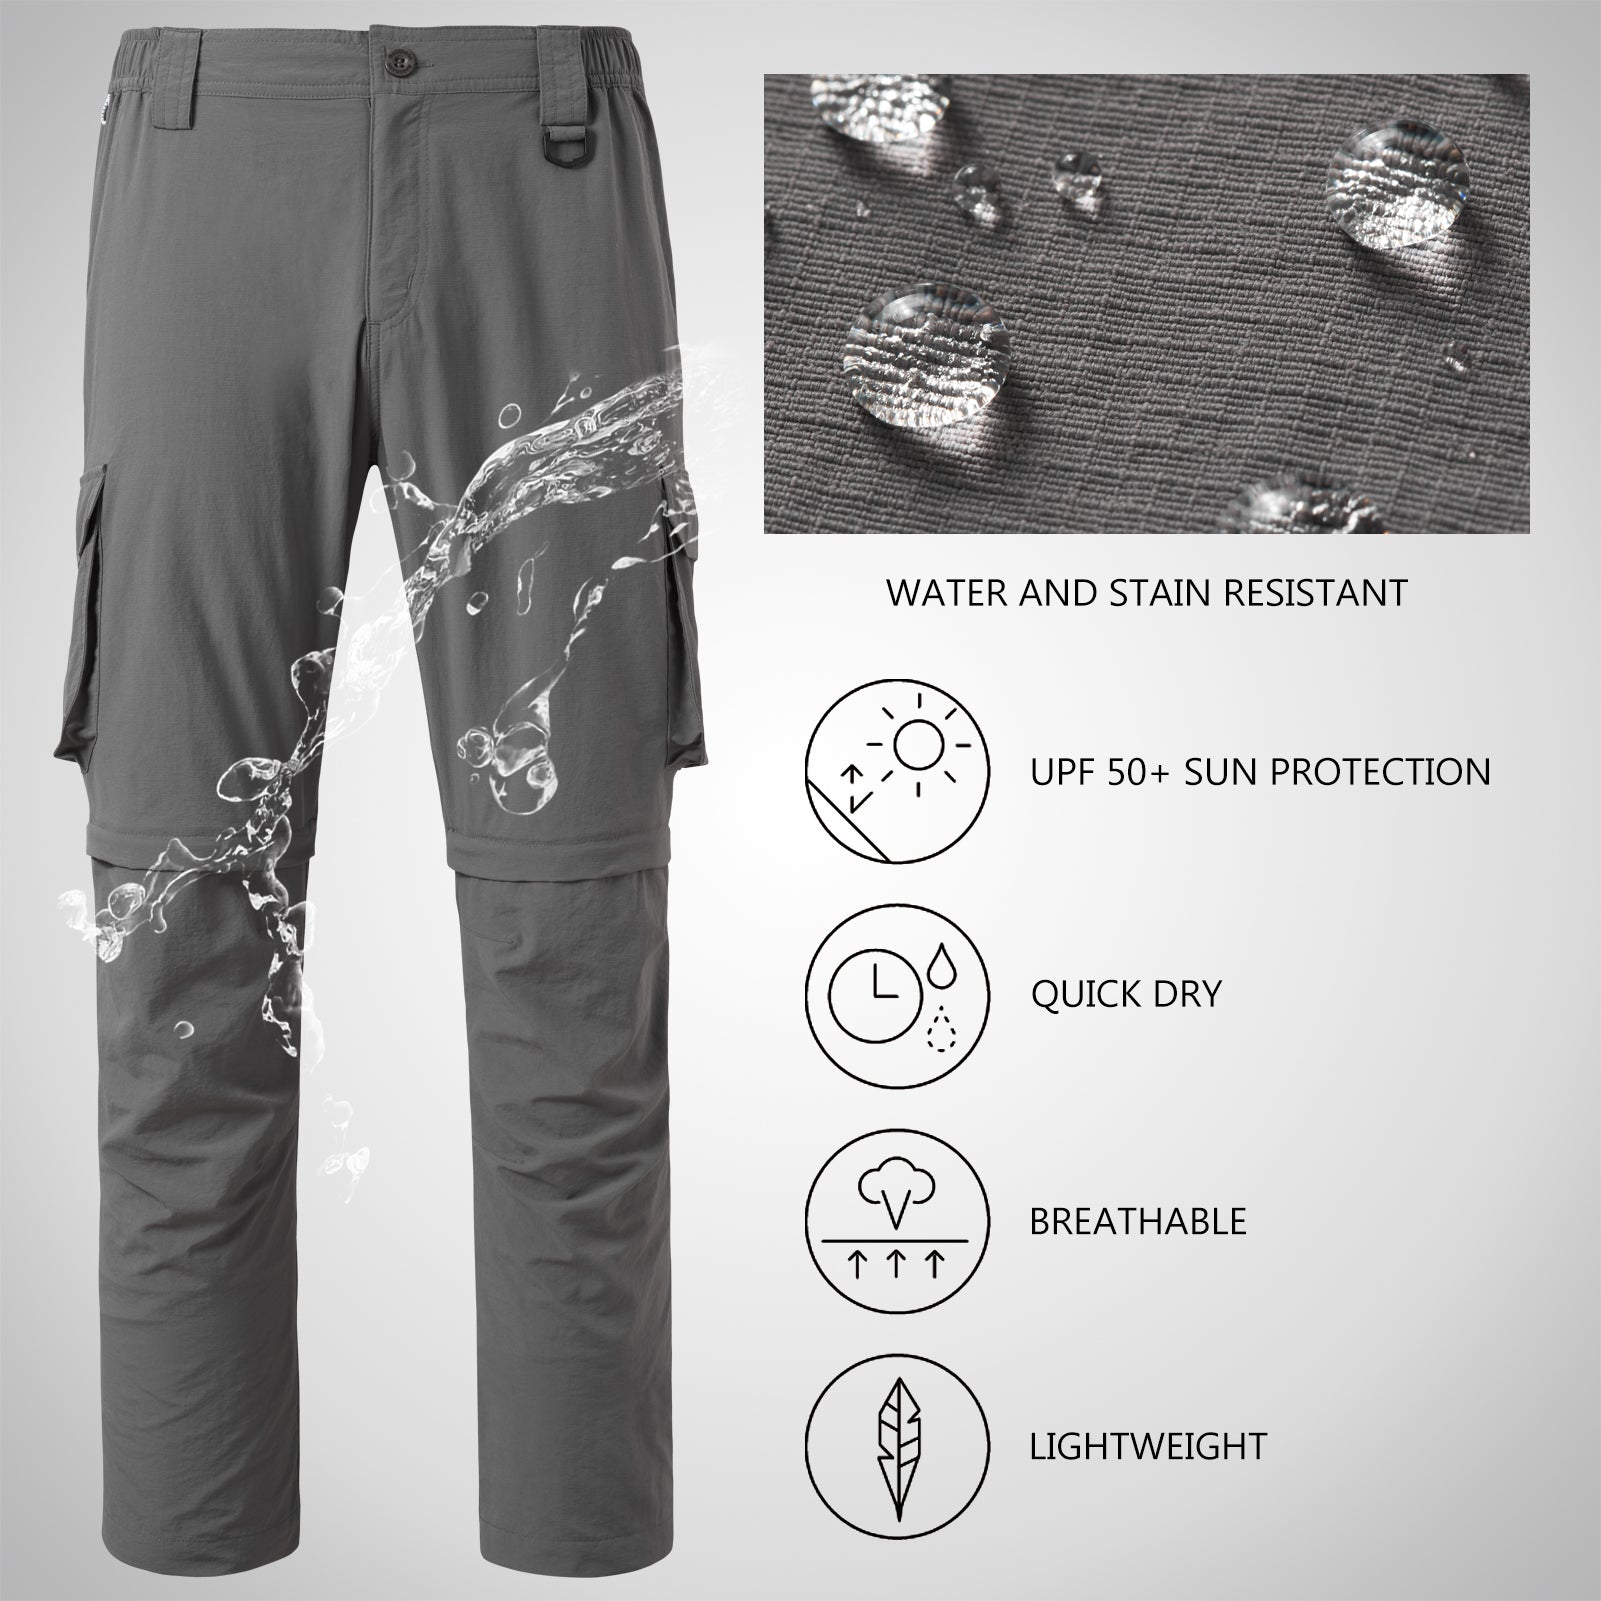 FREE SOLDIER Men's Quick-drying Pants Lightweight Pants Summer